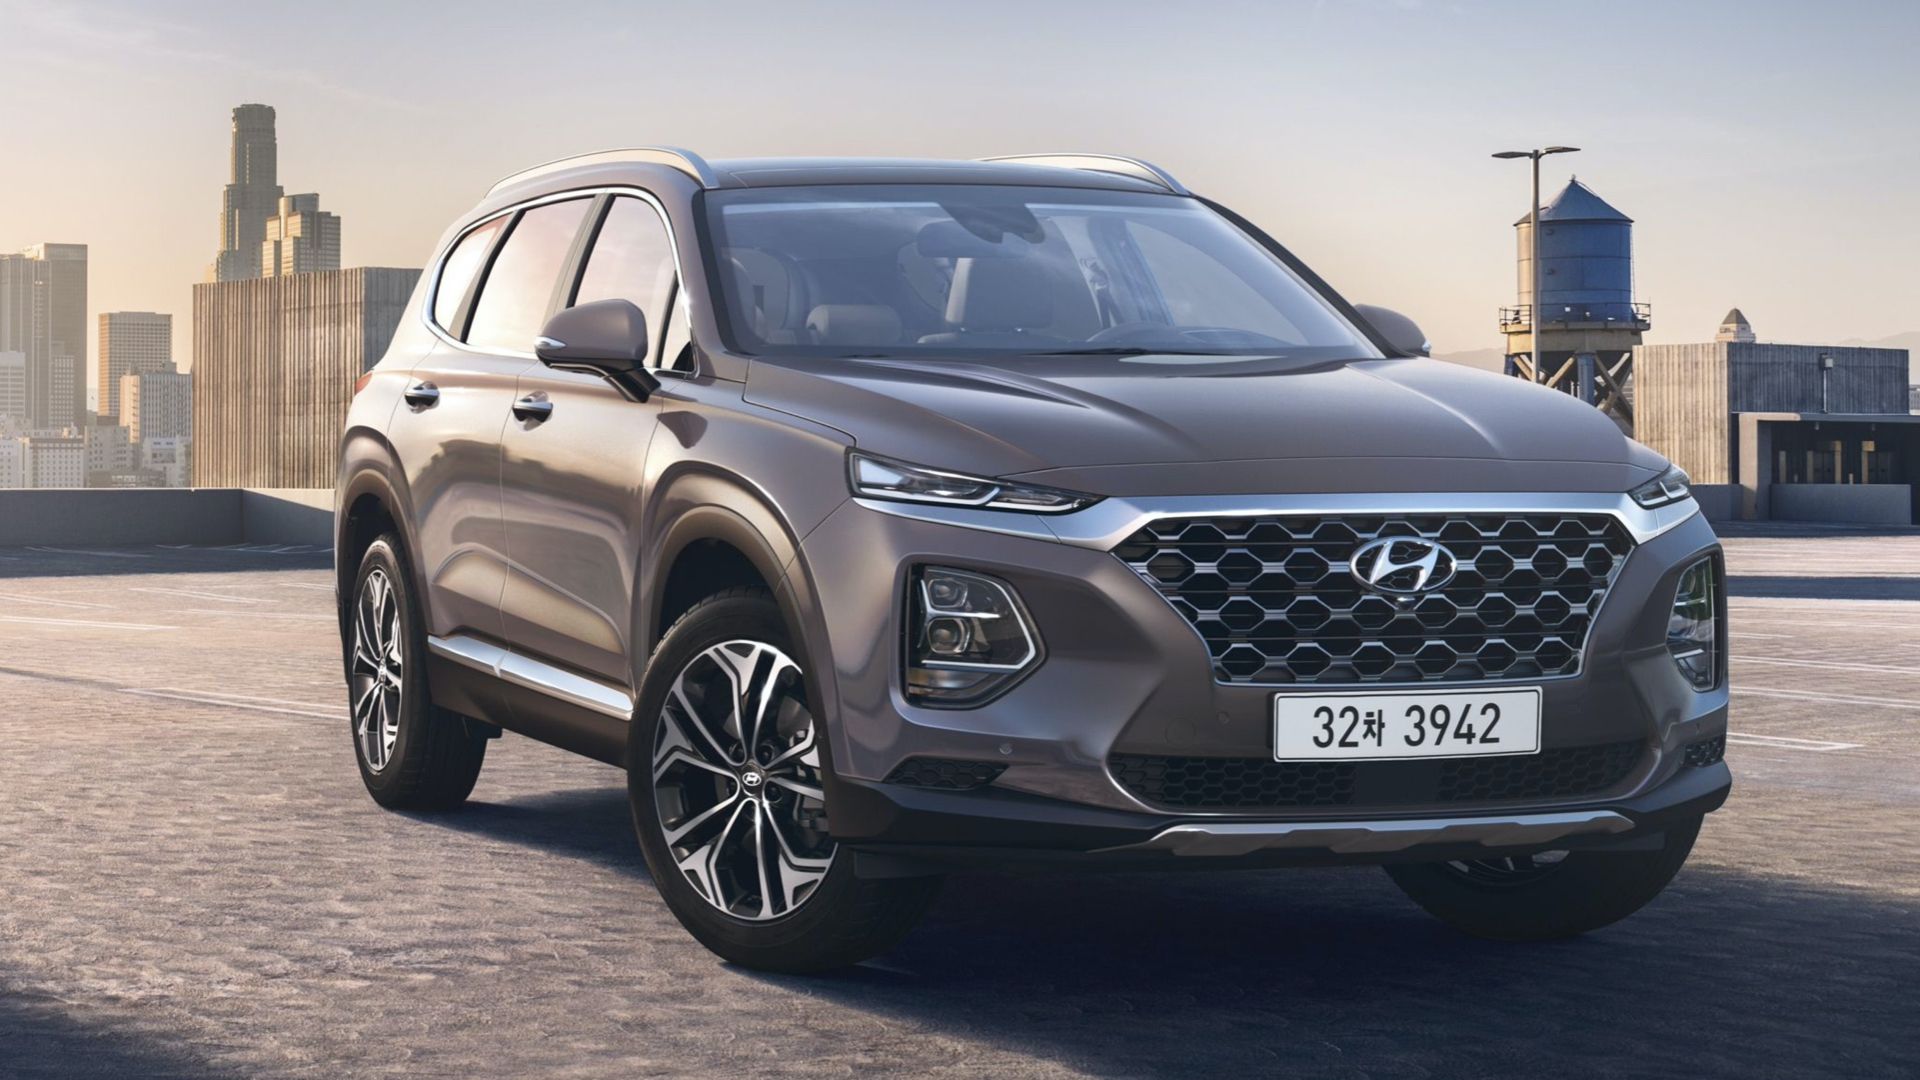 2019 Hyundai Santa Fe three-quarter front view